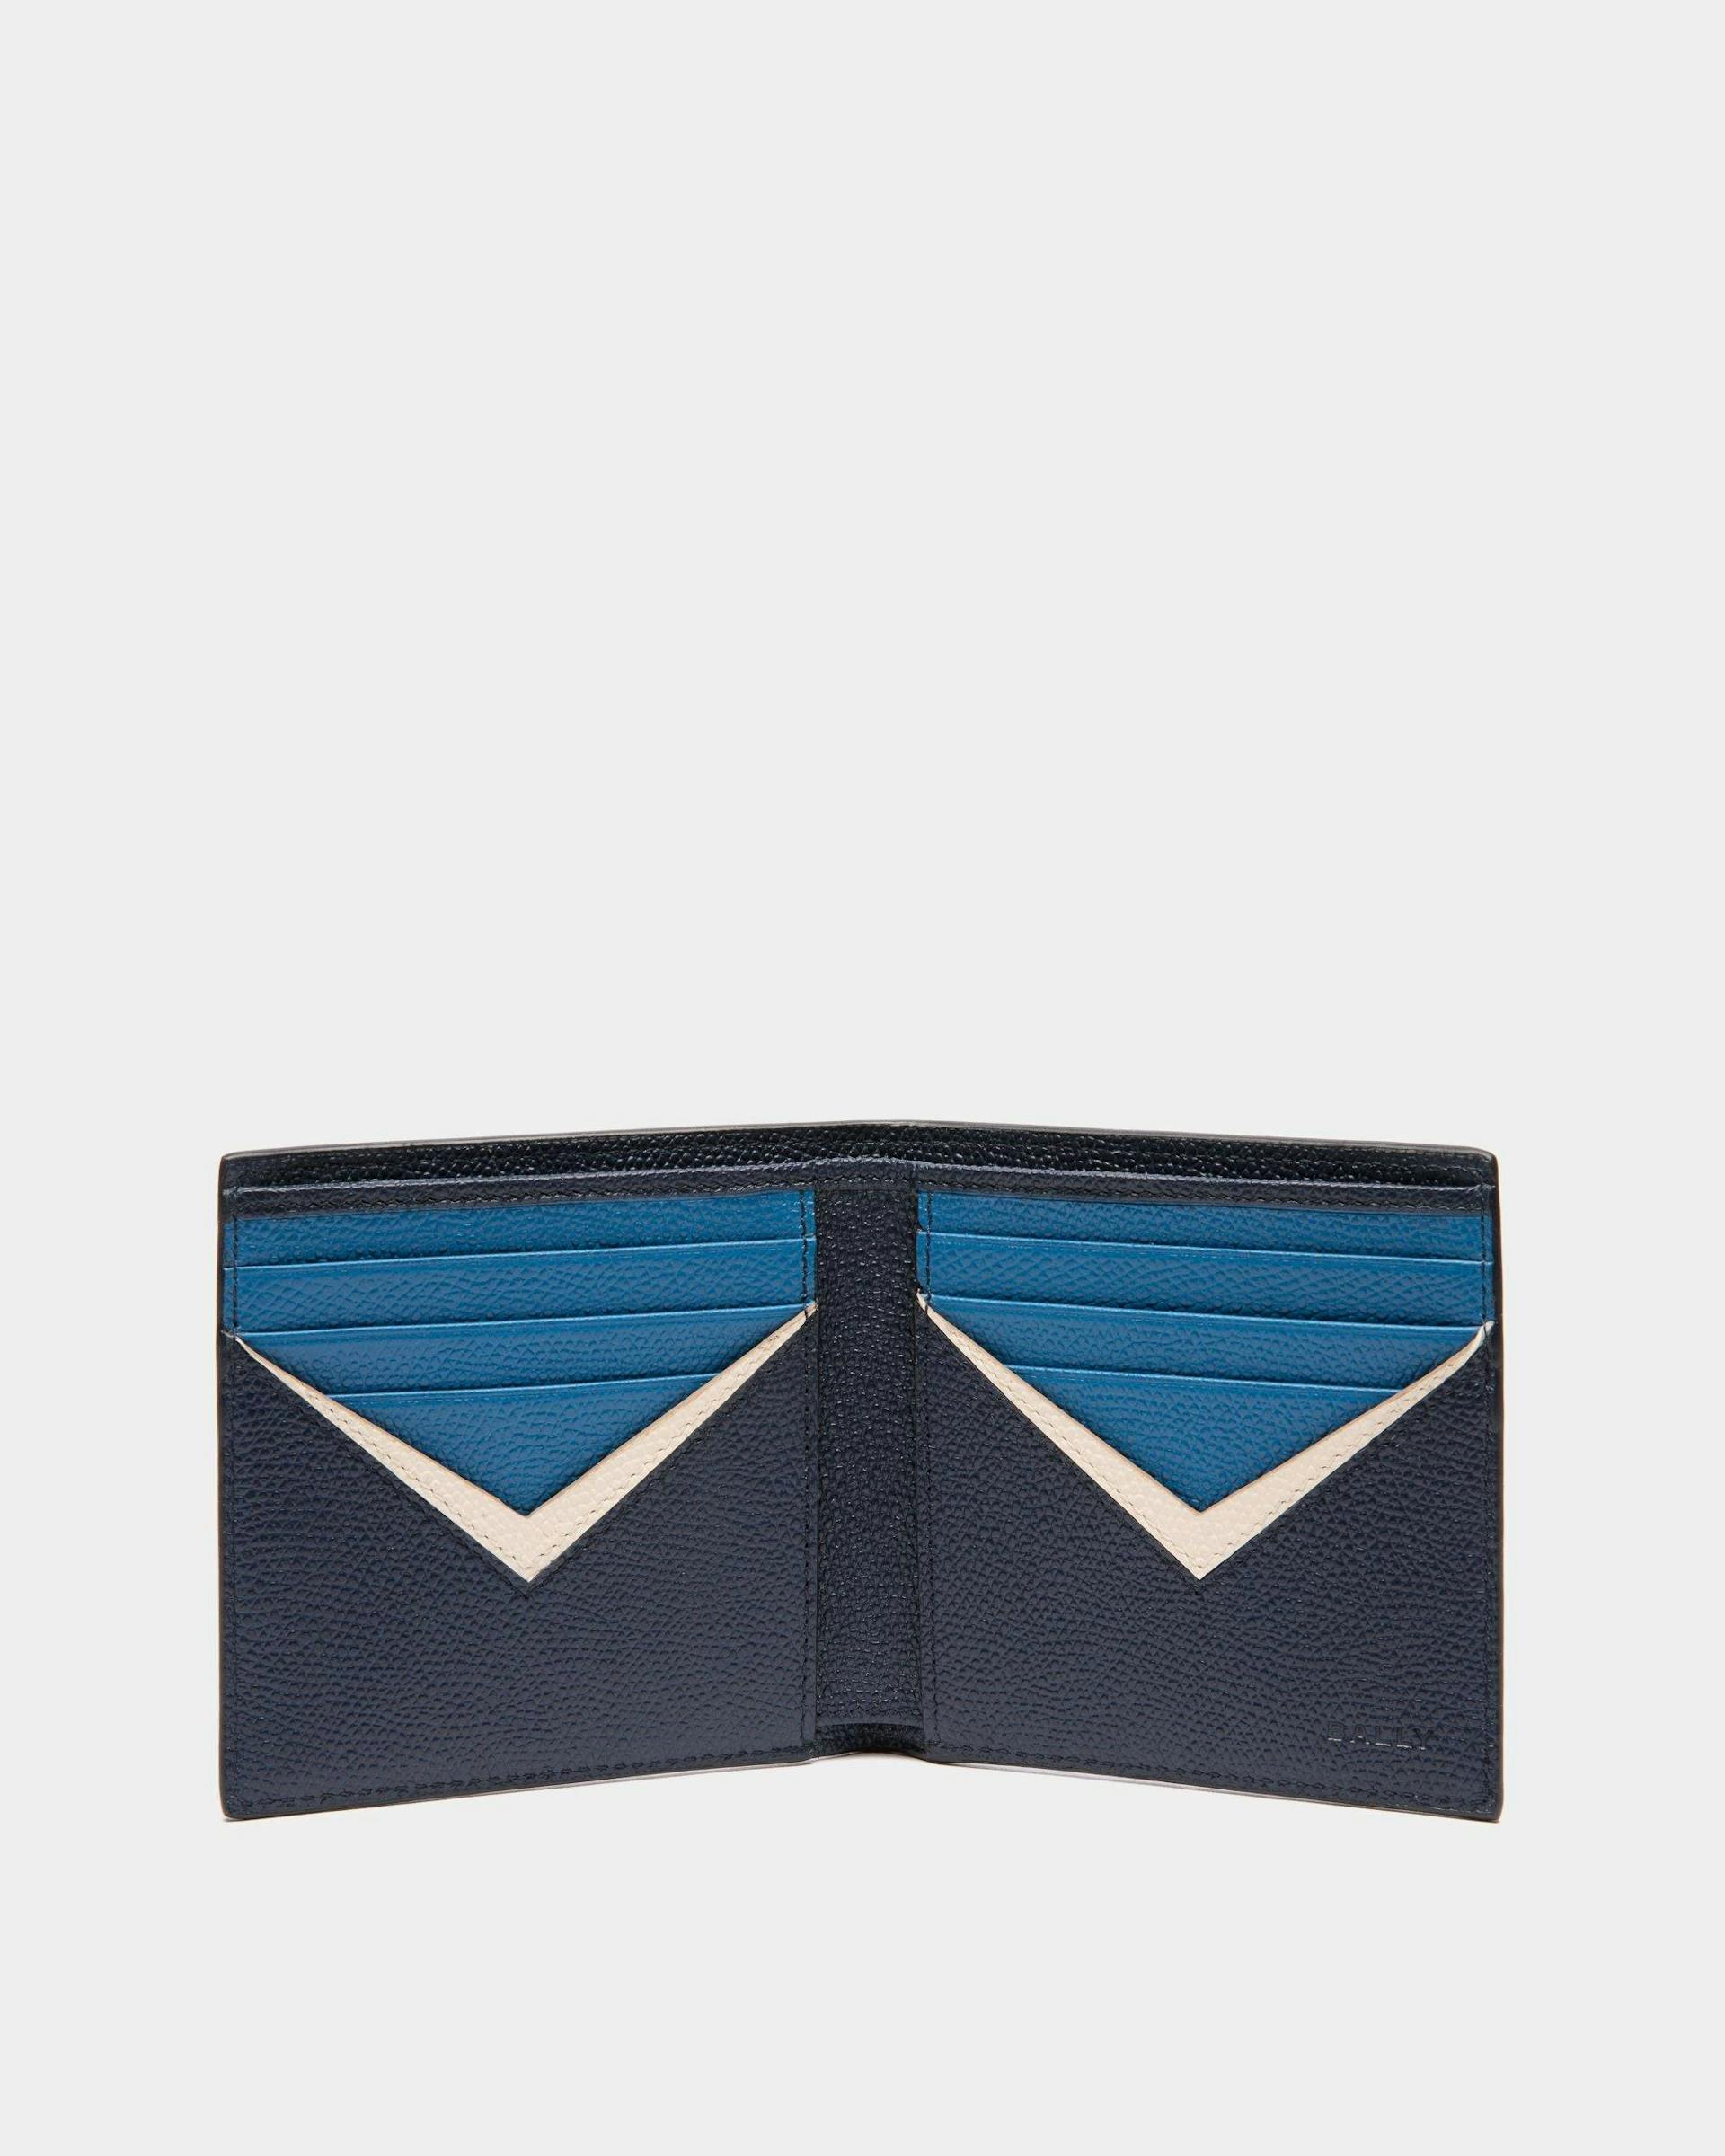 Men's Flag Bifold Wallet in Blue Leather | Bally | Still Life Open / Inside